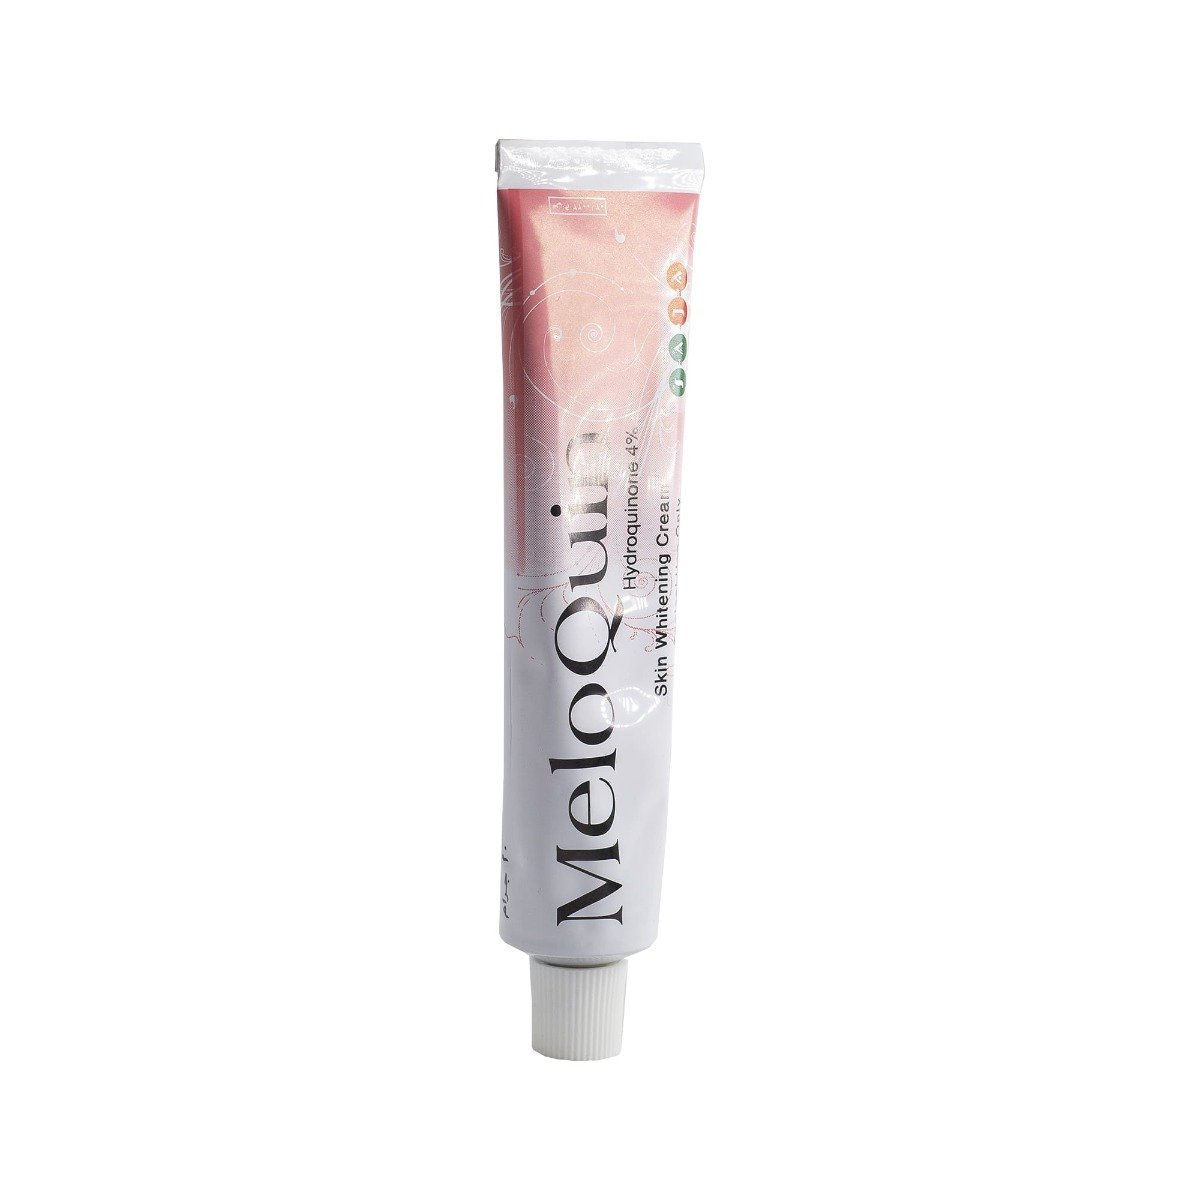 Meloquin Whitening Cream - 20 gm - Bloom Pharmacy